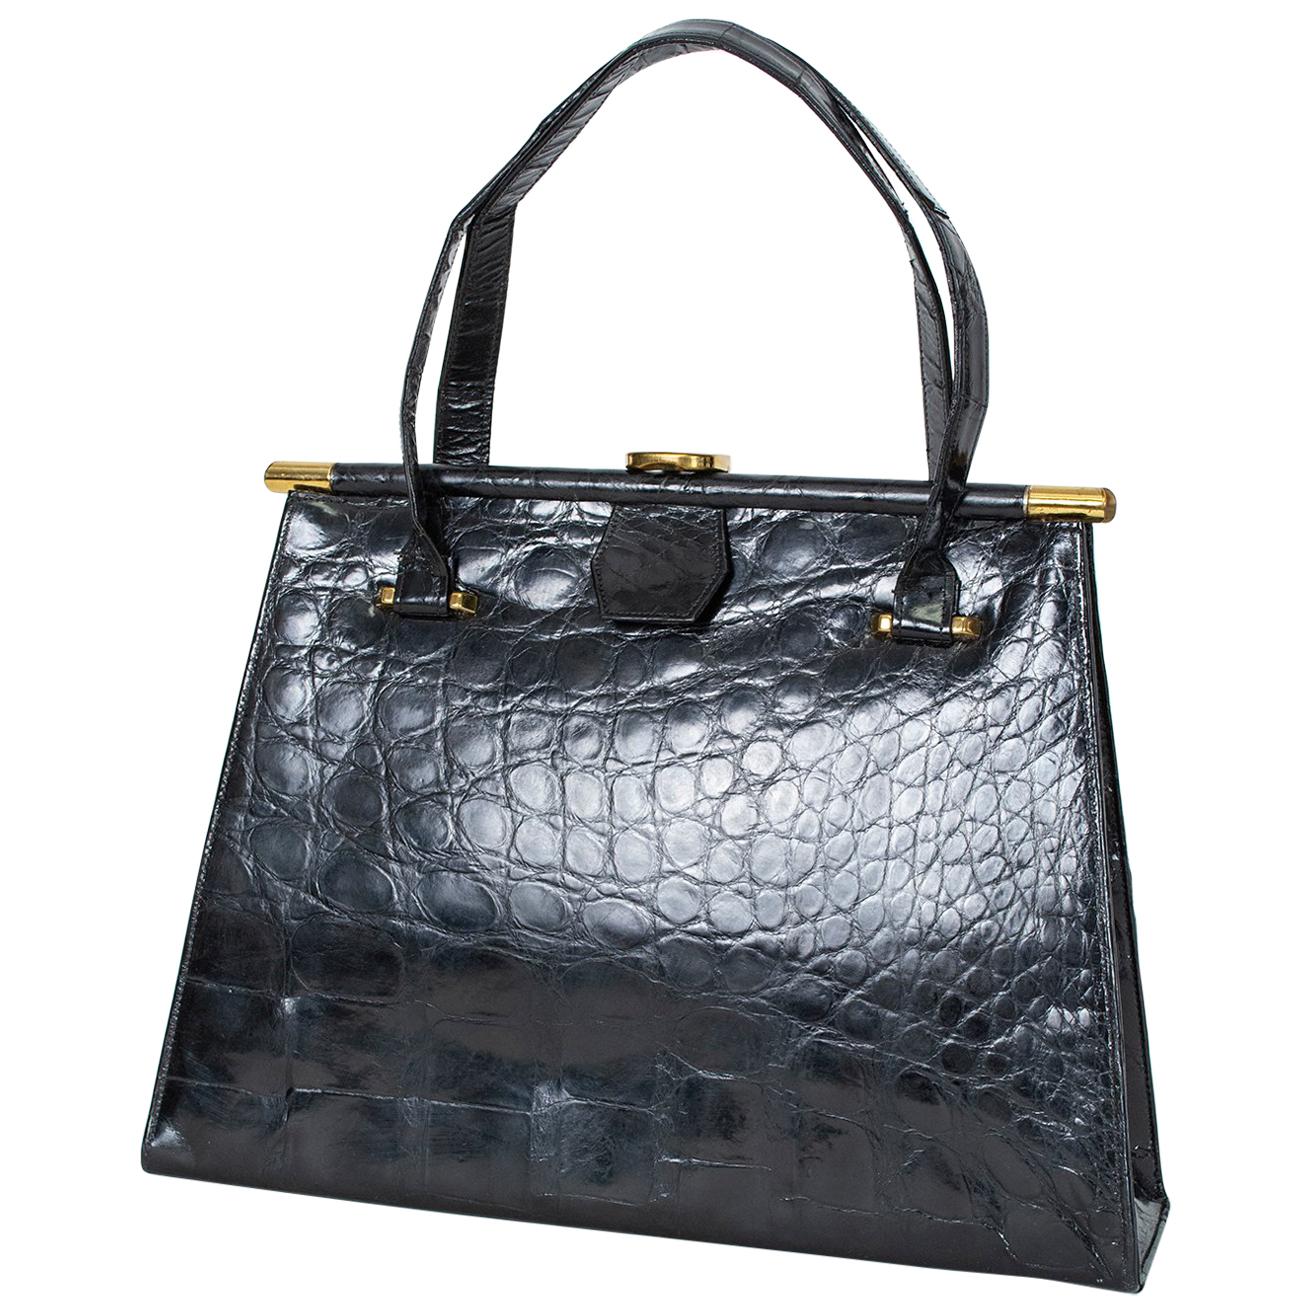 Louis Vuitton Bags Start at $450 at This Vintage Sample Sale Slash